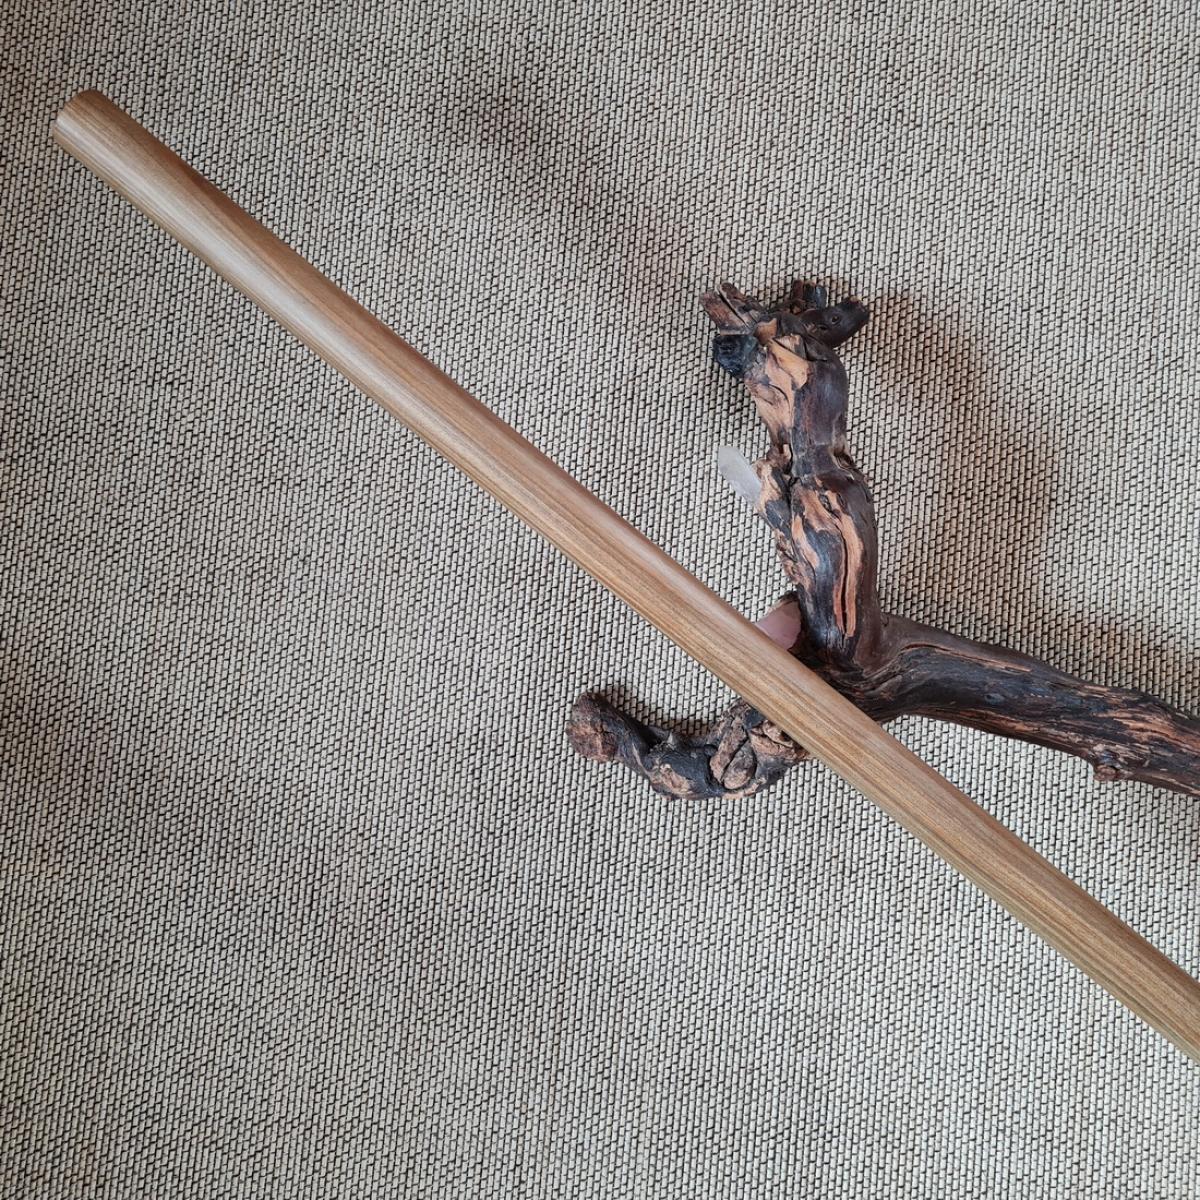 Jo stick made of Lignum Vitae➤ www.bokken-shop.de ✅ suitable for Aikido ✓ Kendo ✓ Koryu ✓ Jodo ✓ Your Budo specialist!